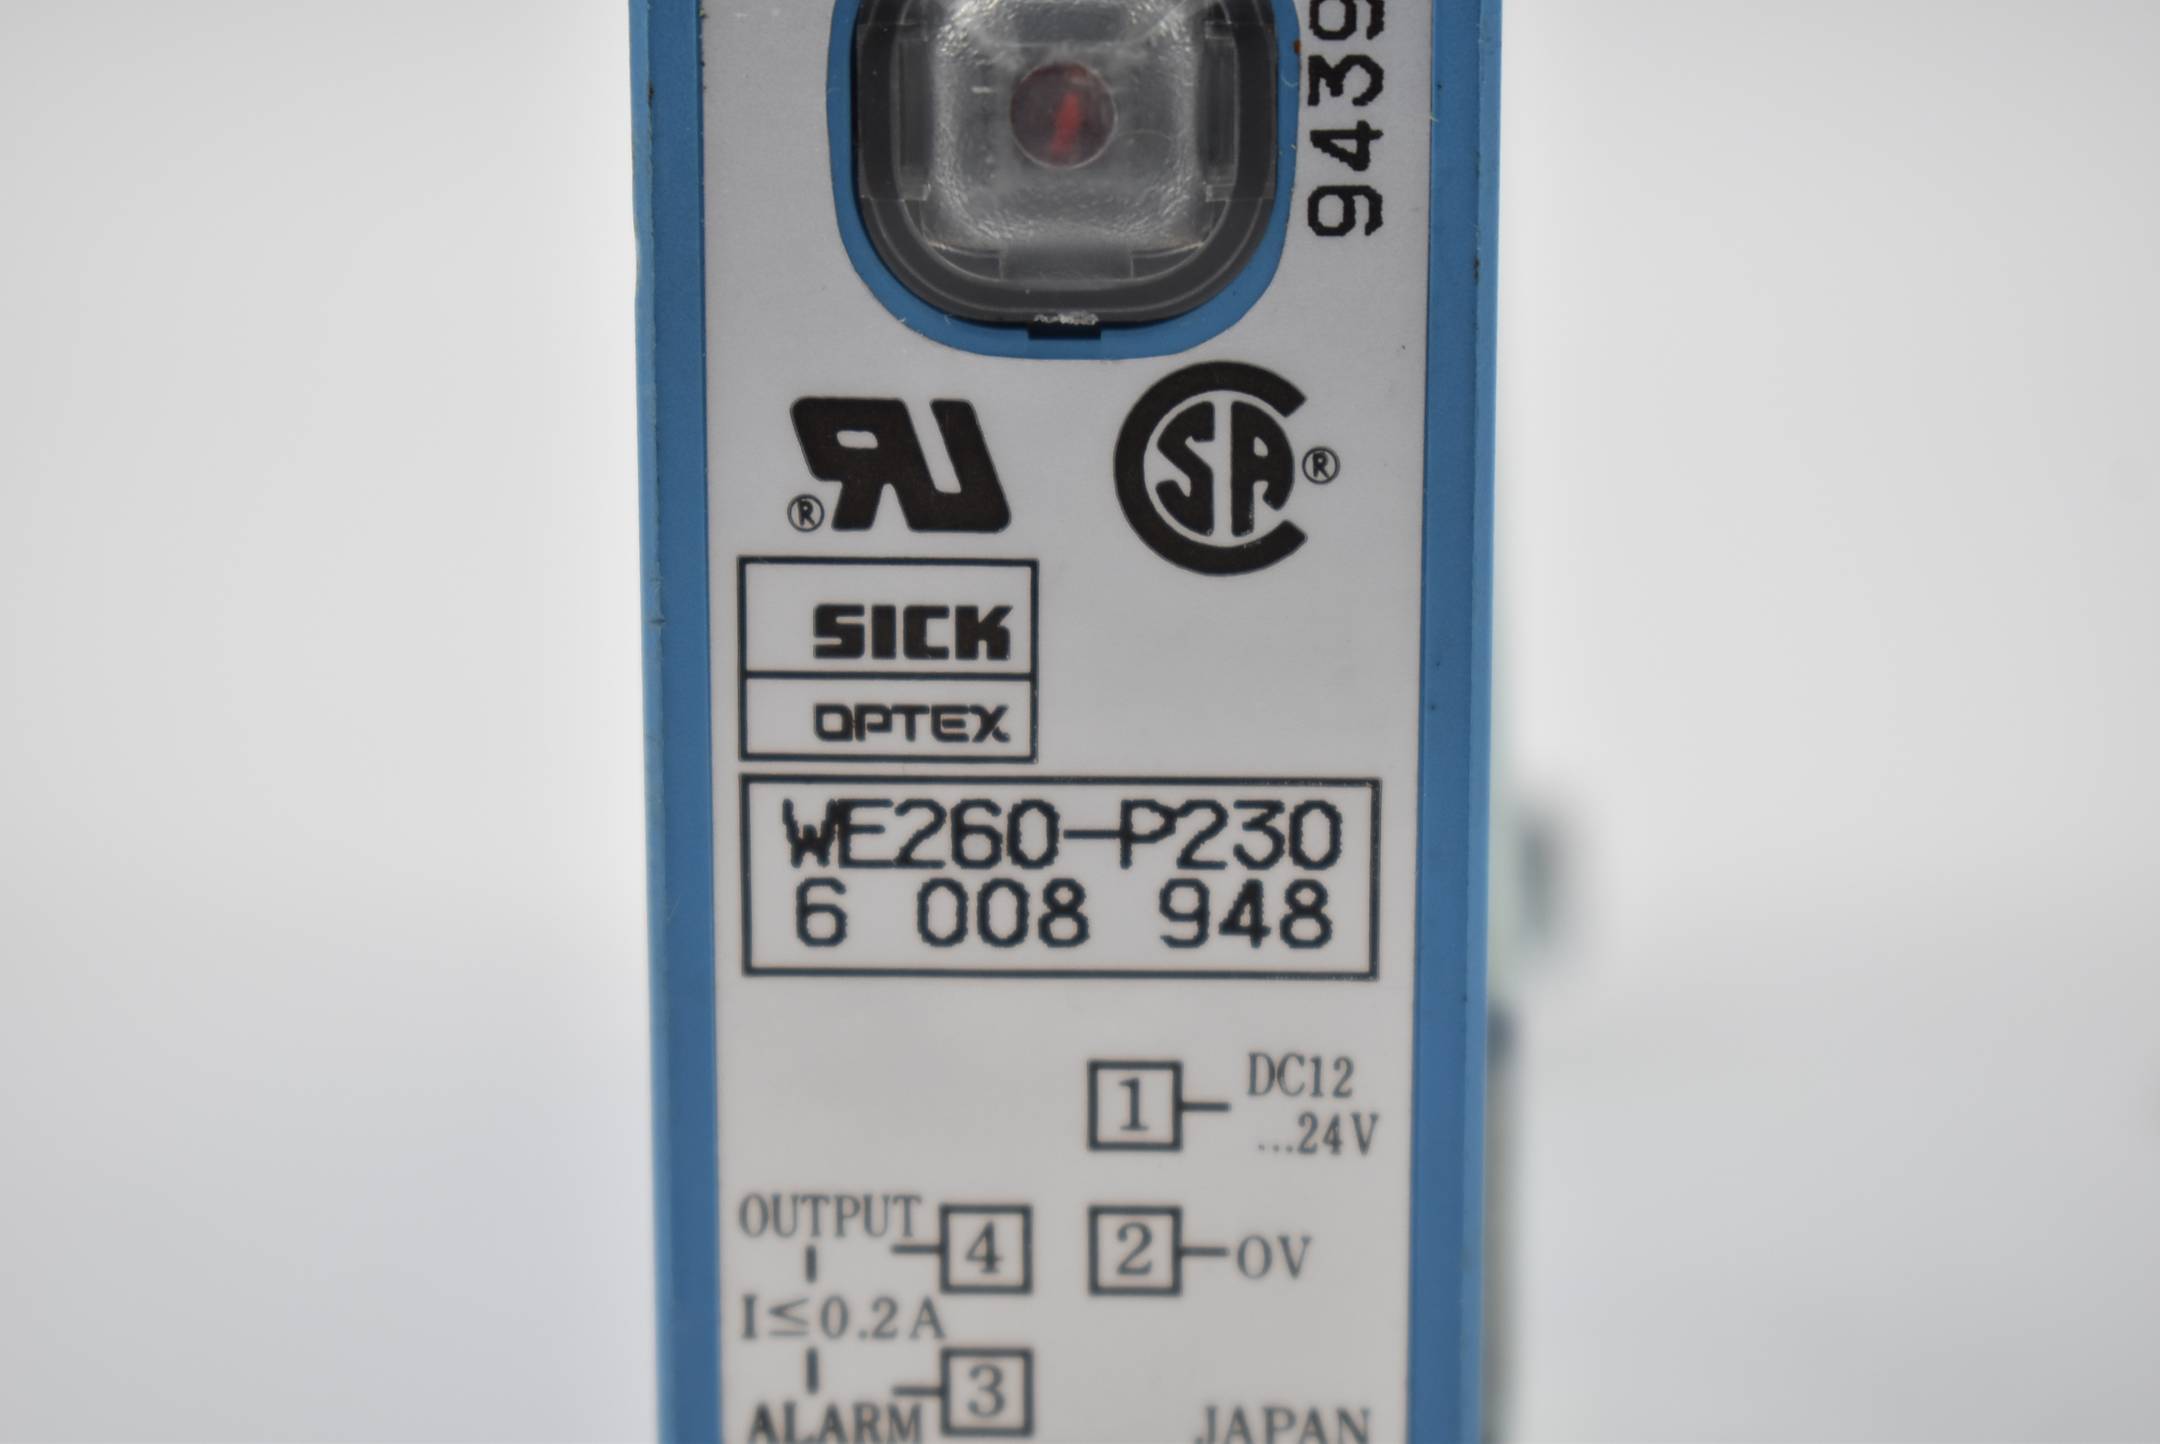 Sick Optex Lichtschranke WE260-P230 ( 6008948 )